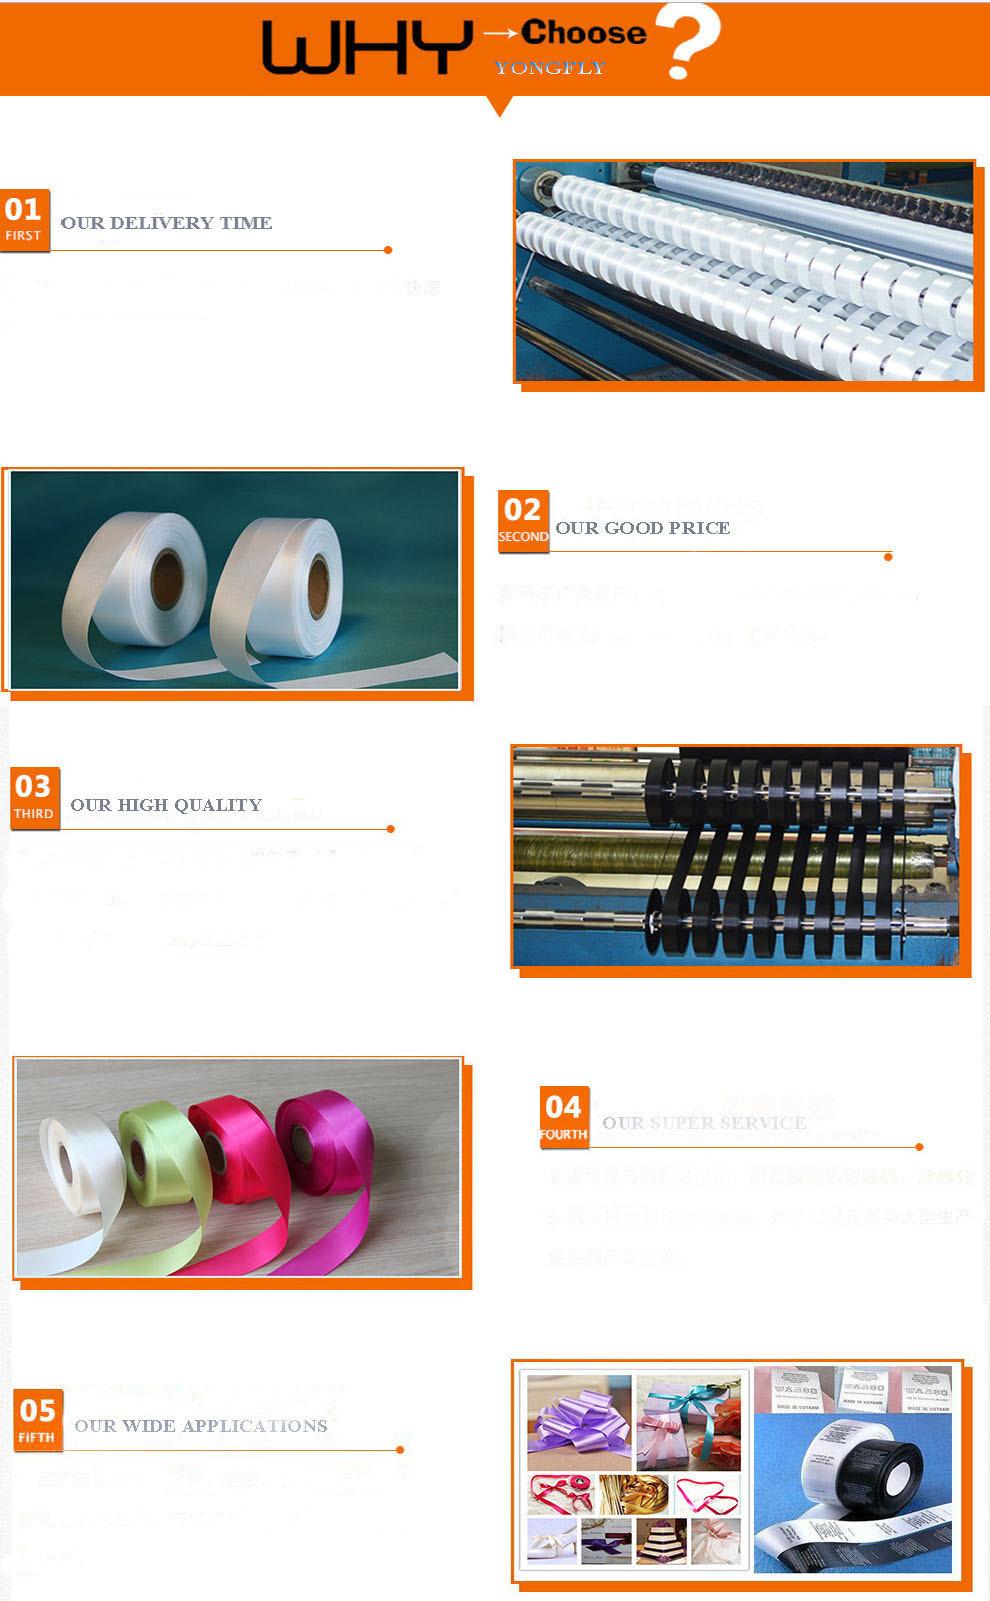 Thermal Transfer Printing Nylon Taffeta Paper Ribbon (NT2109)